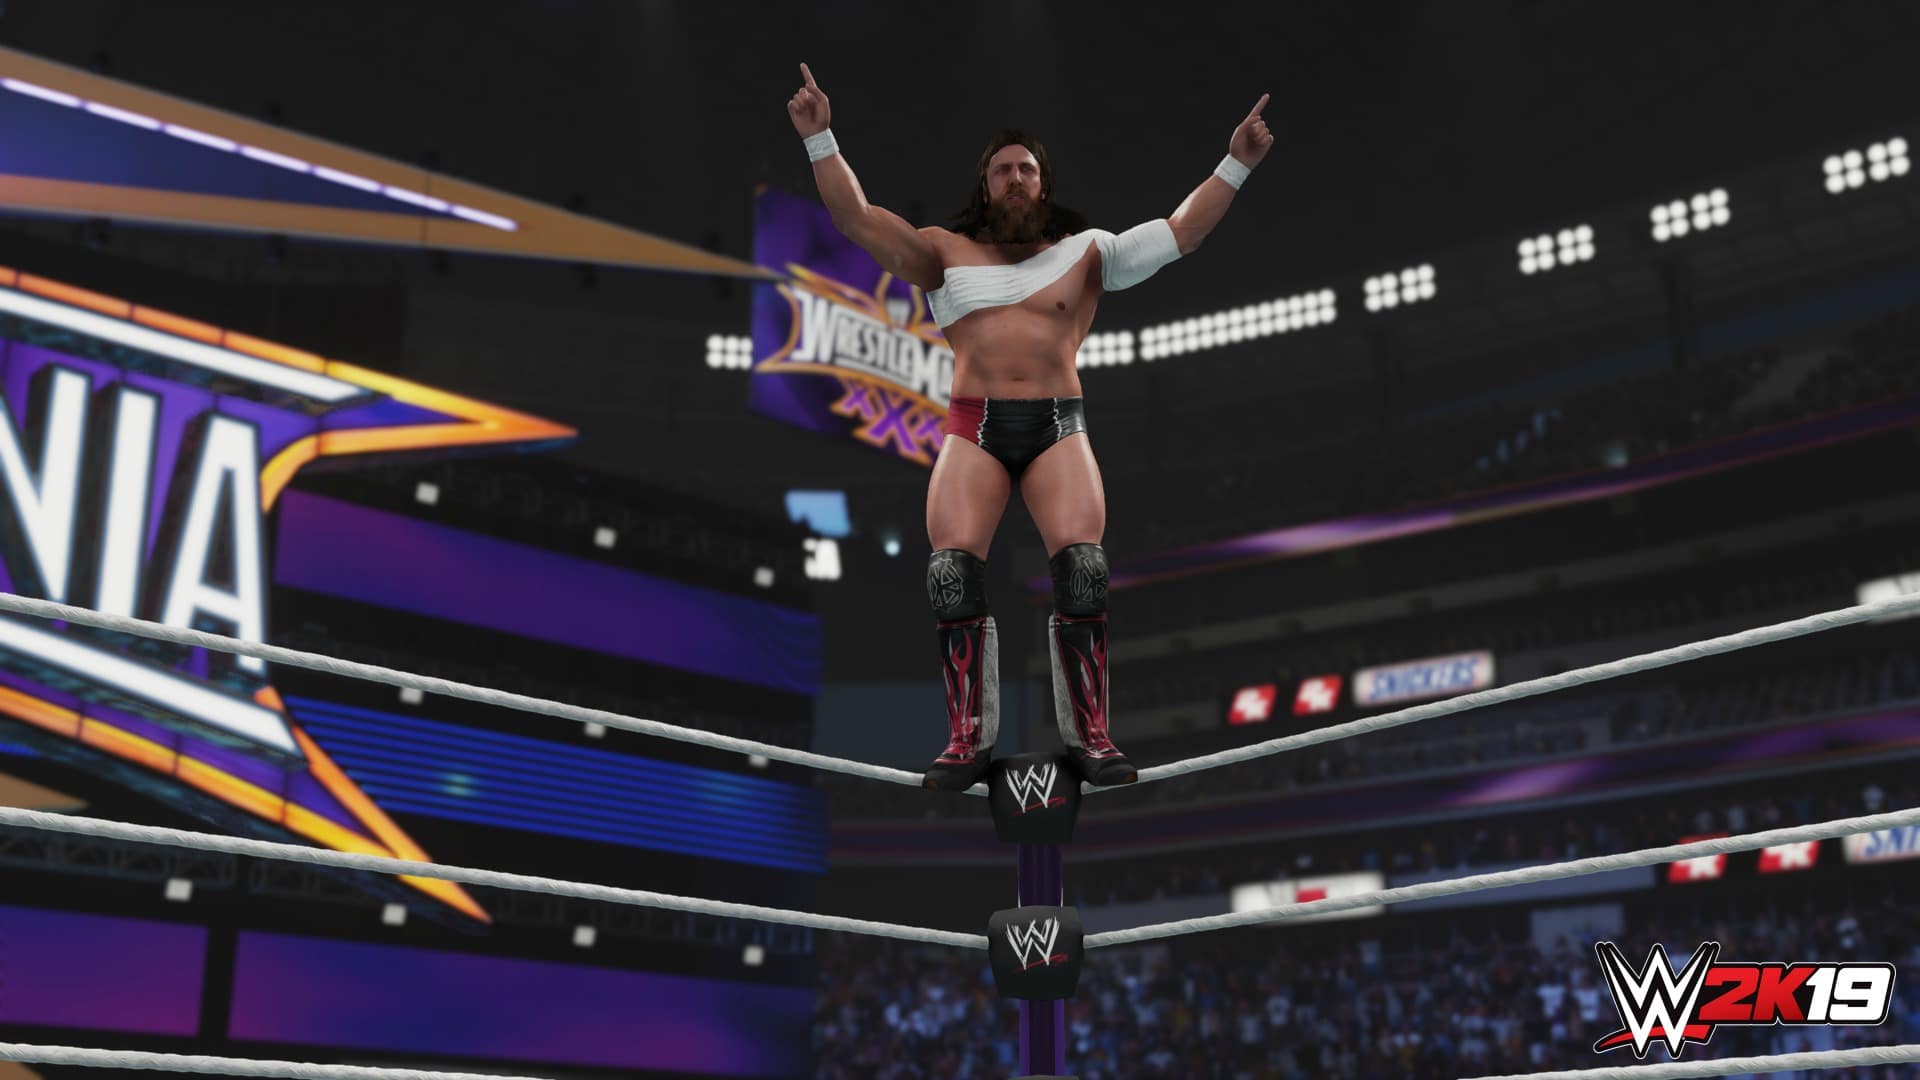 2K SHOWCASE RETURNS IN WWE 2K19 – FEATURING DANIEL BRYAN-GAMERSRD